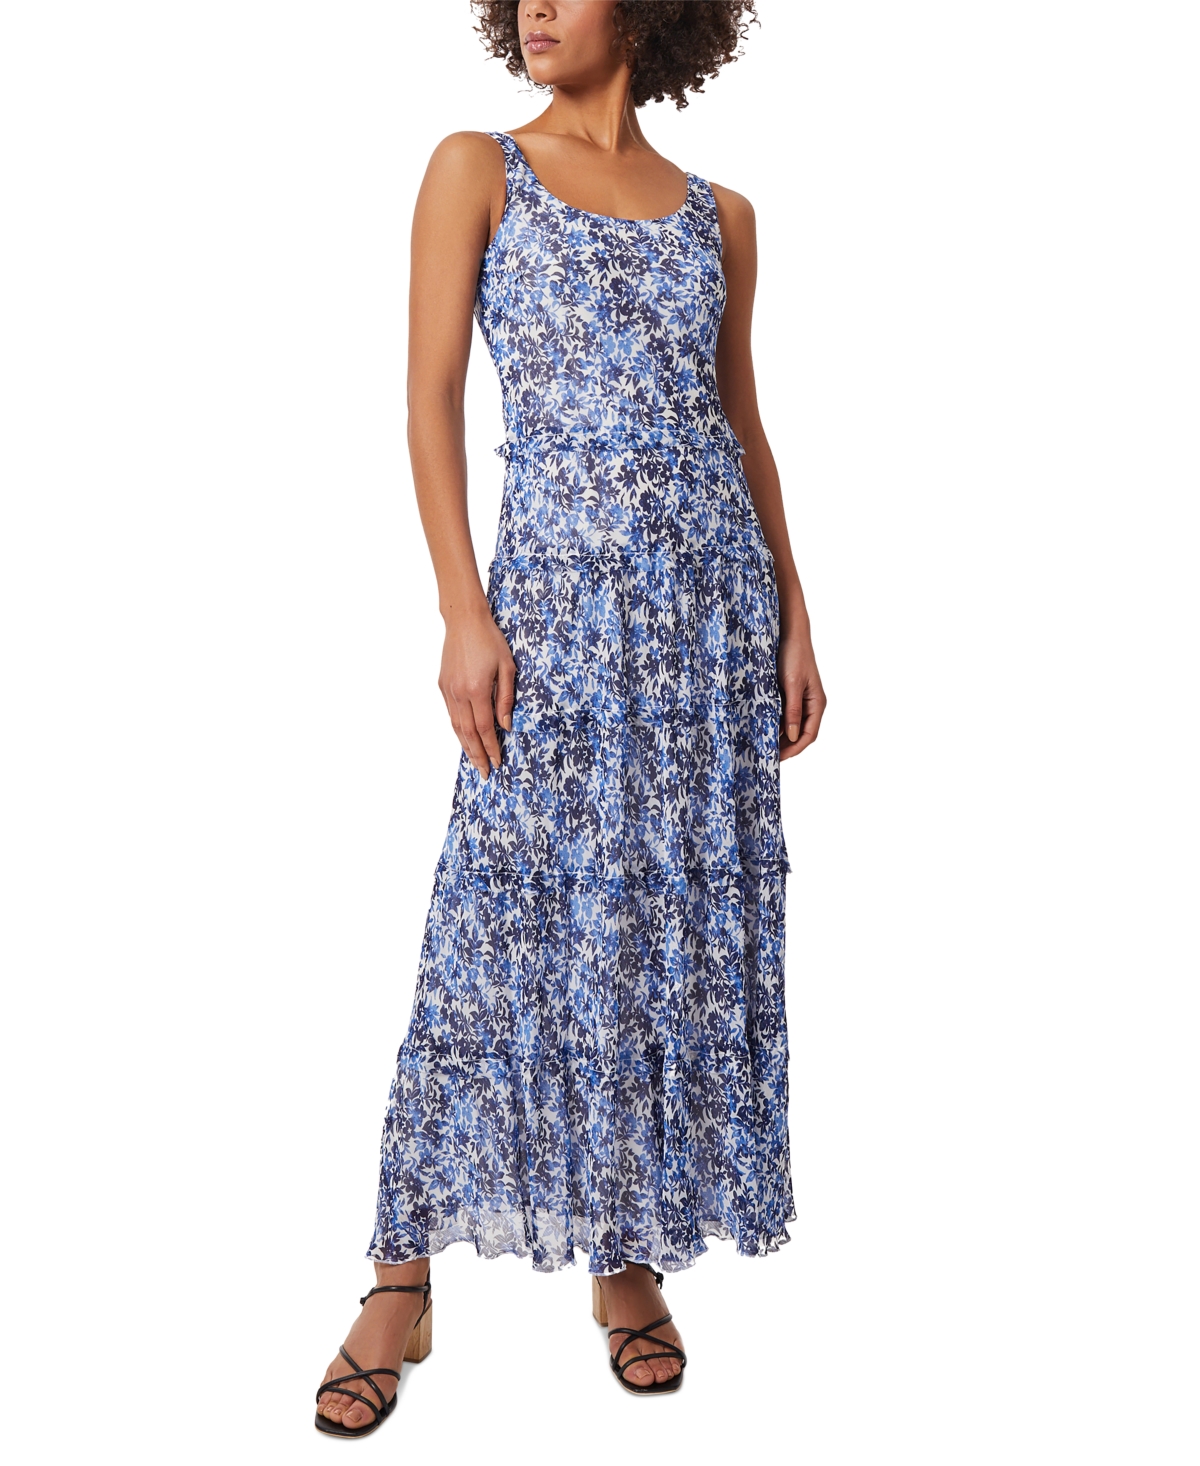 Women's Printed Multi-Tiered Scoop-Neck Dress - NYC White/Blue Horizon